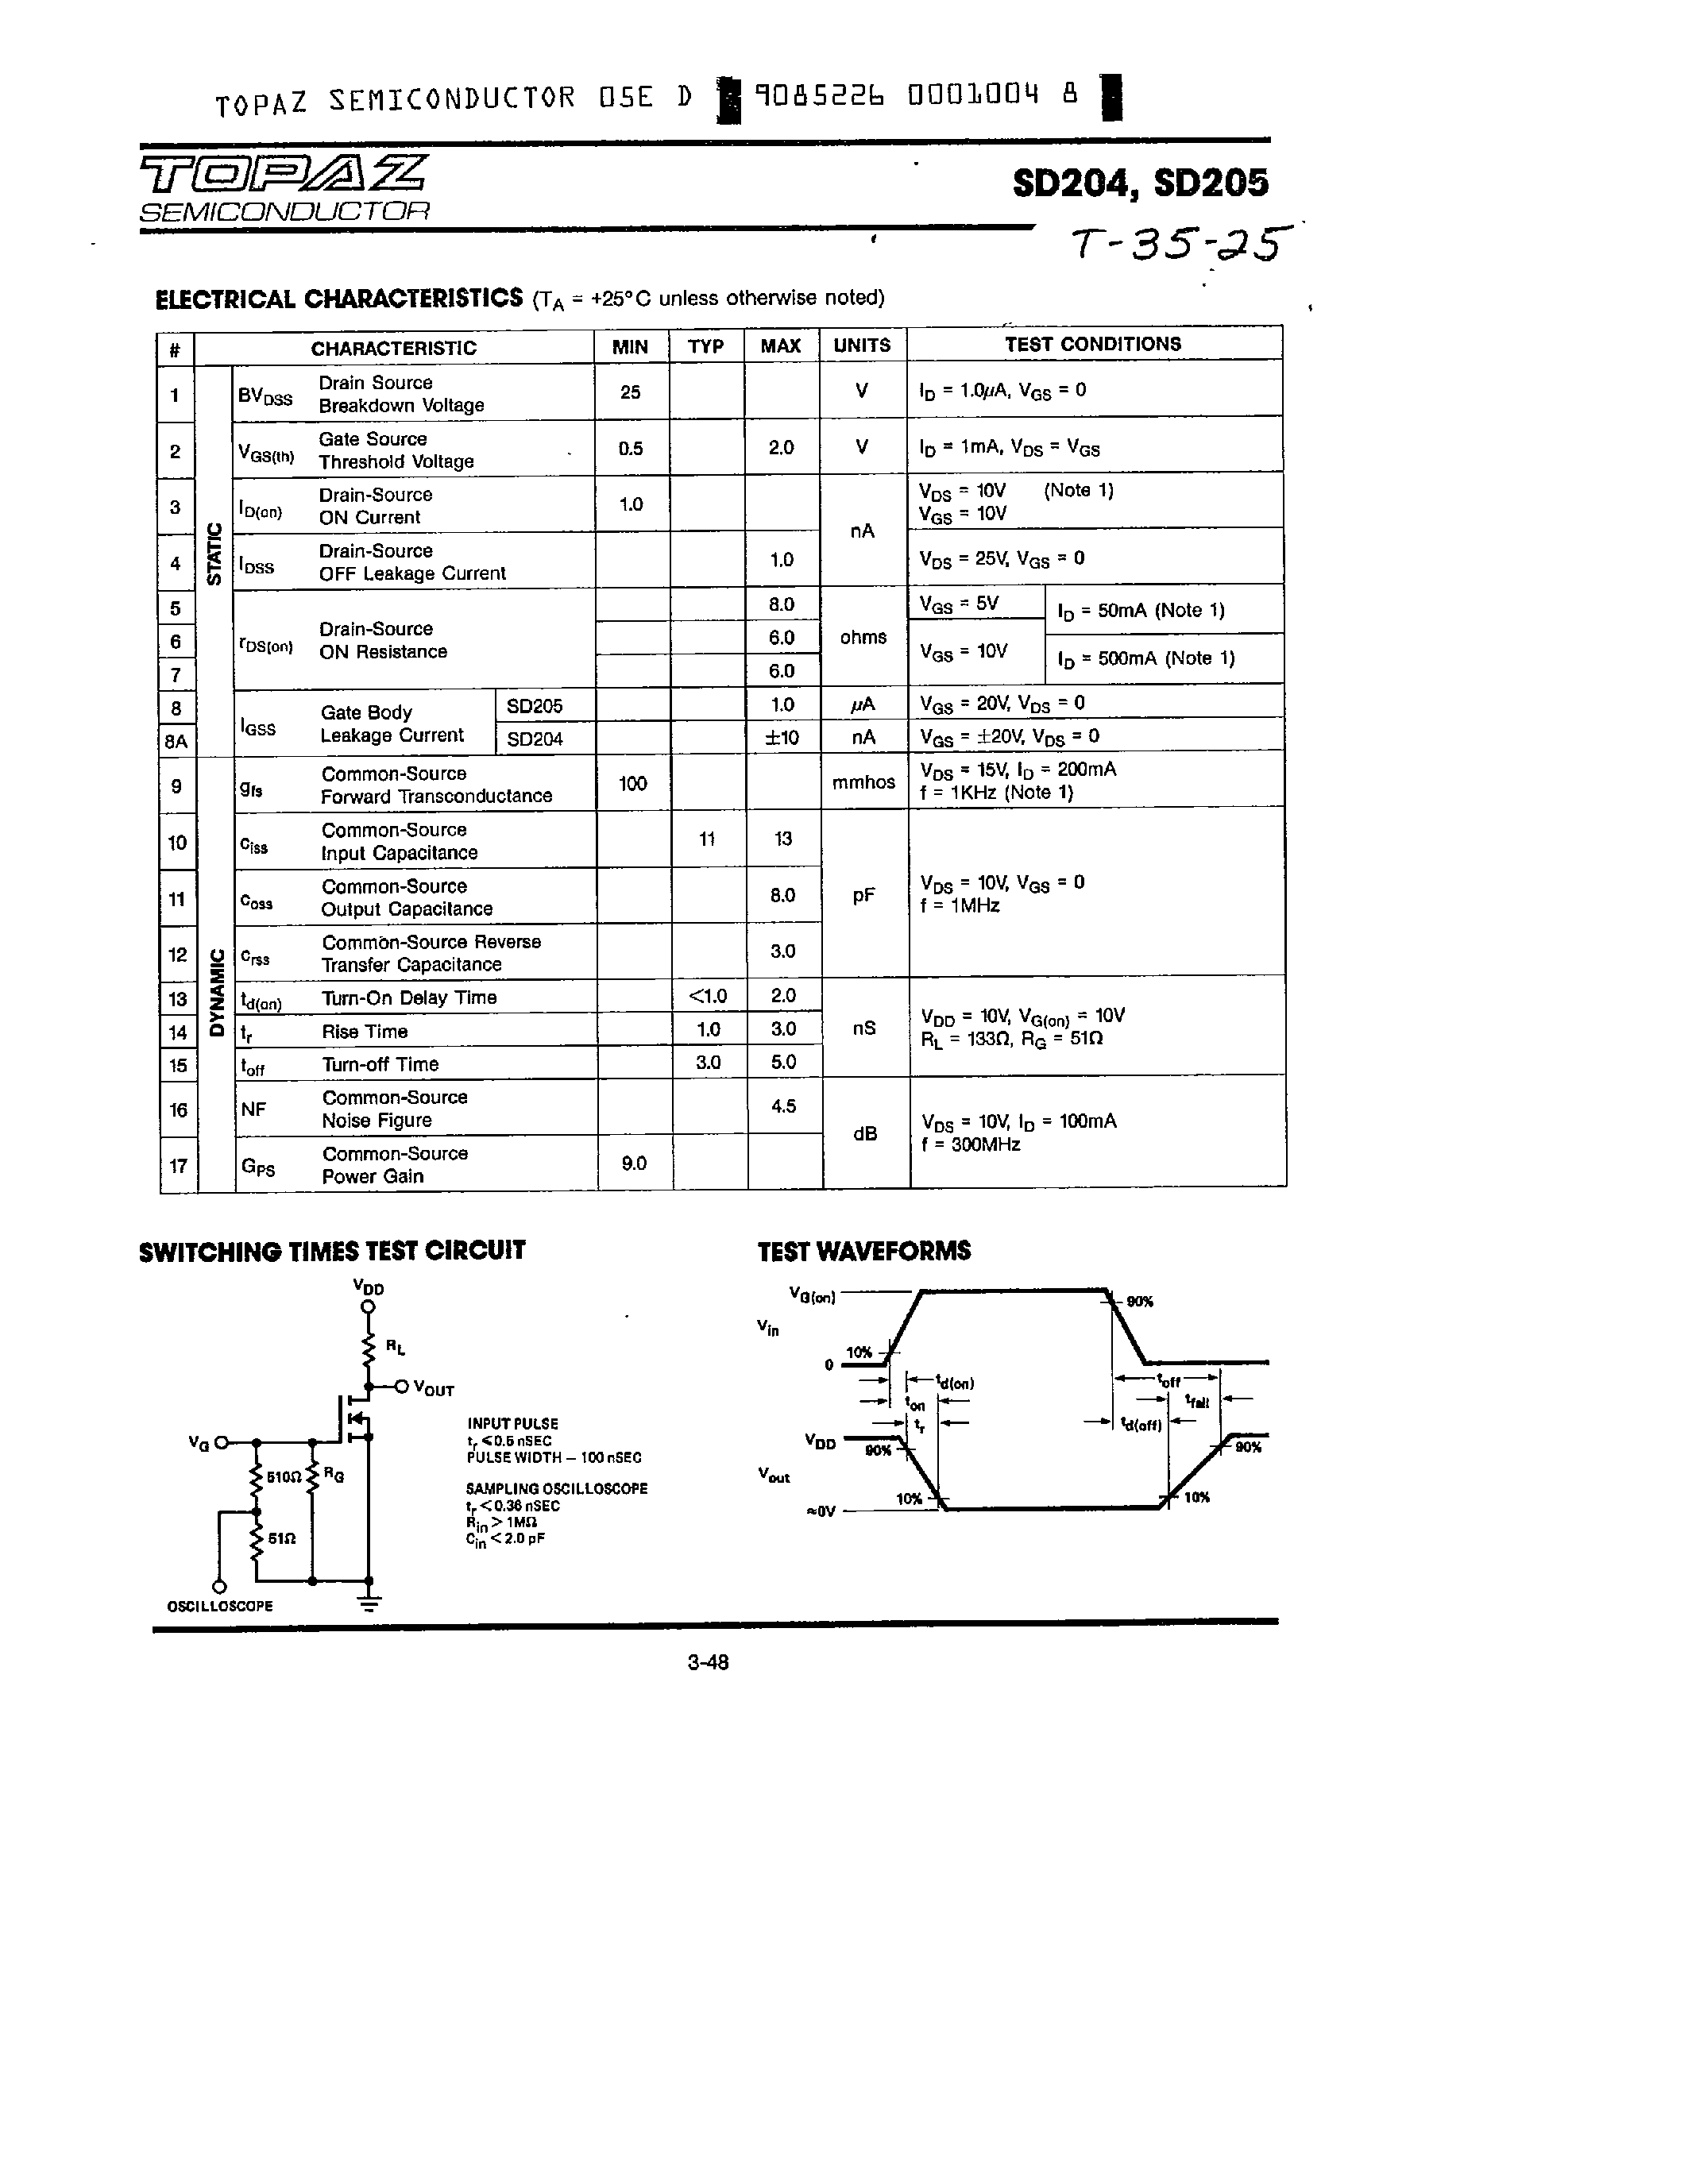 Datasheet SD204 - (SD204 / SD205) N-CHANNEL ENHANCEMEN-MODE D-MOS POWER FETs page 2